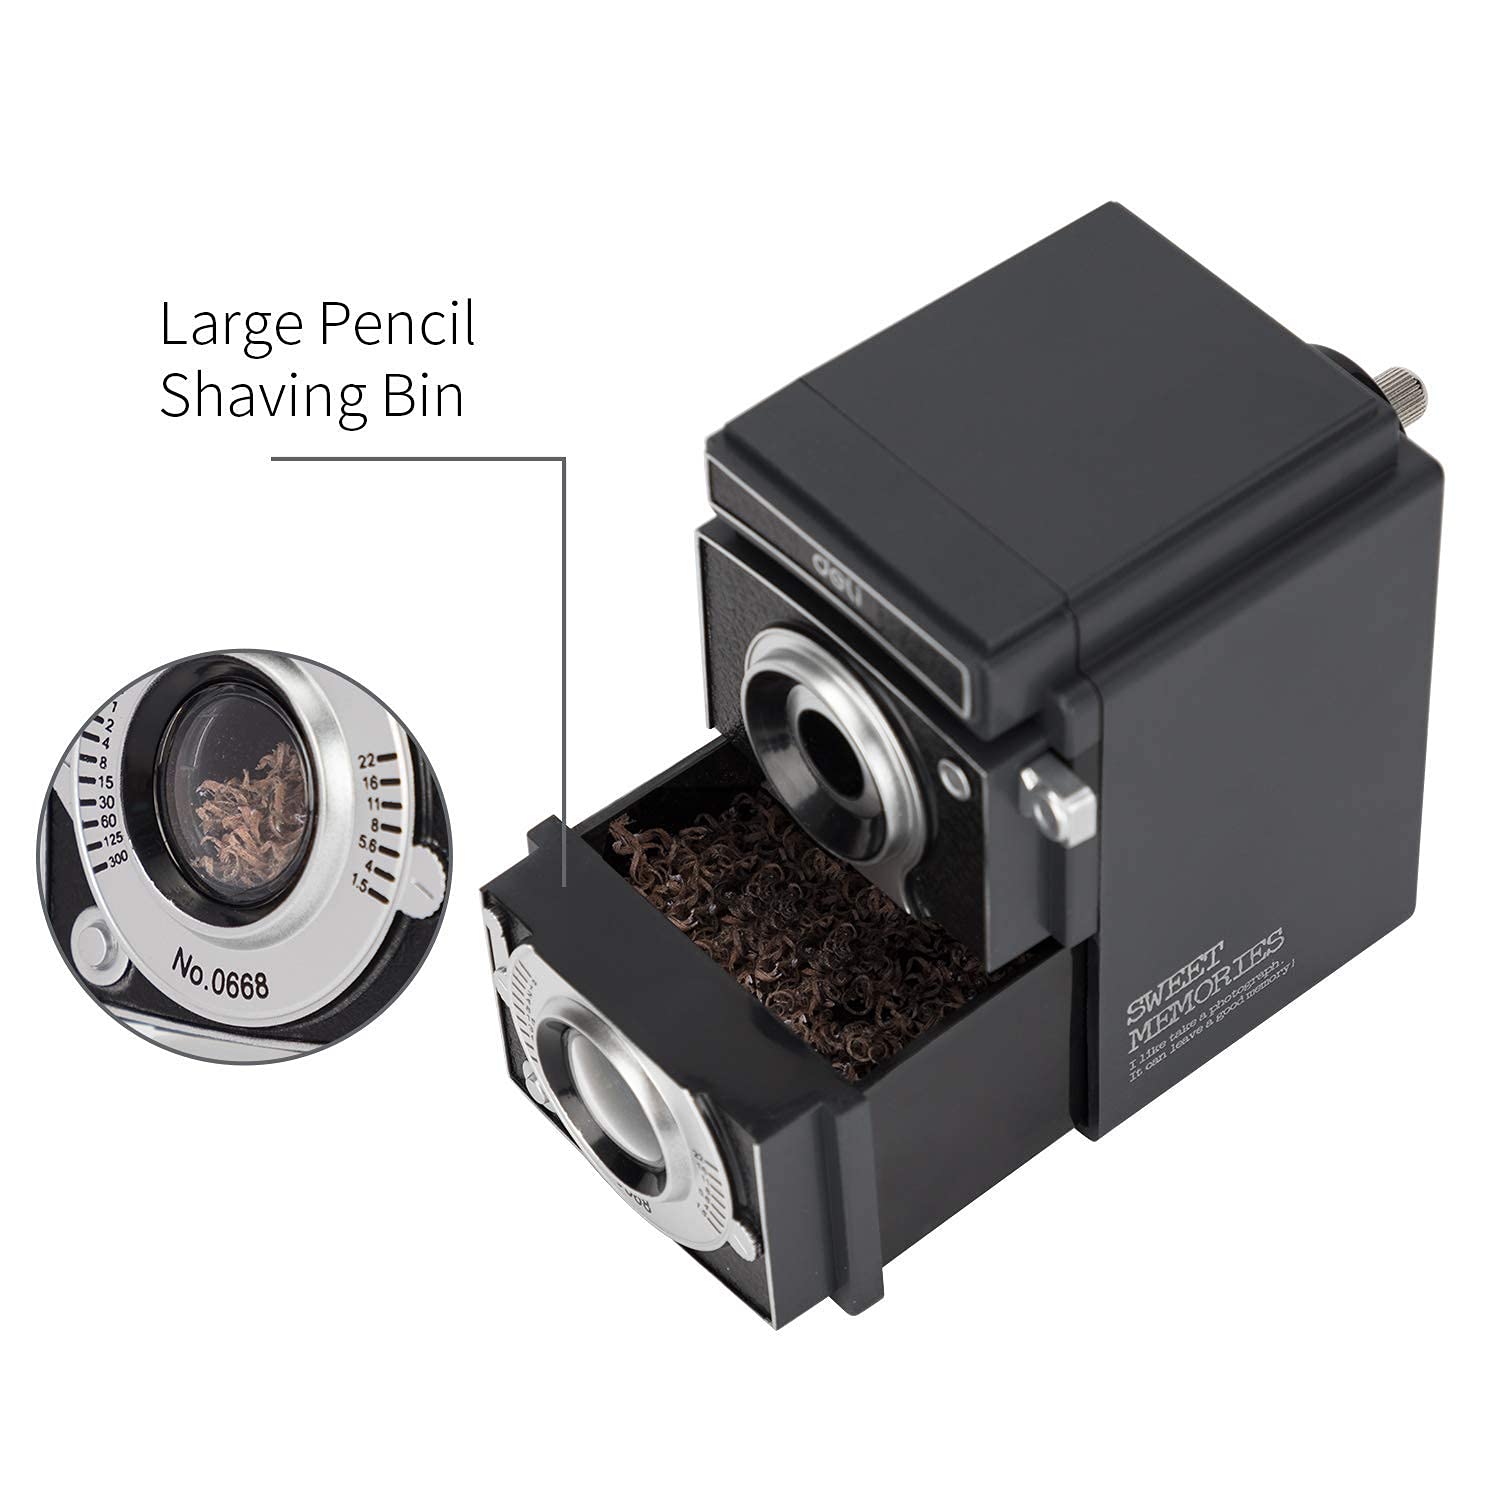 Camera Pencil Sharpener, Adjustable Pencil Point